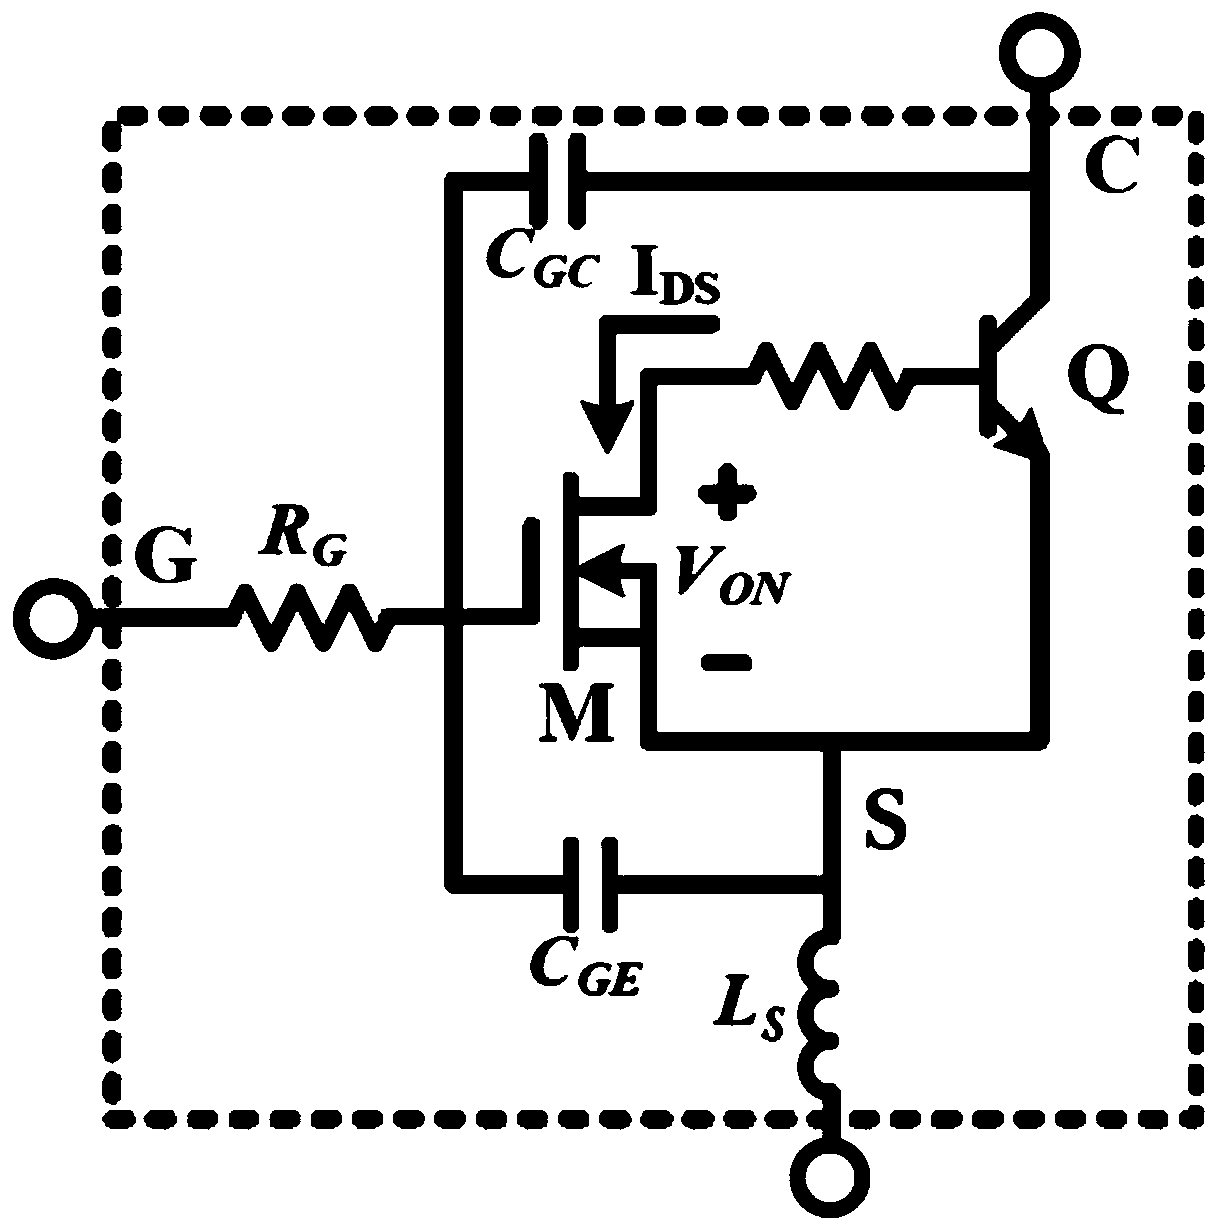 An igbt drive circuit